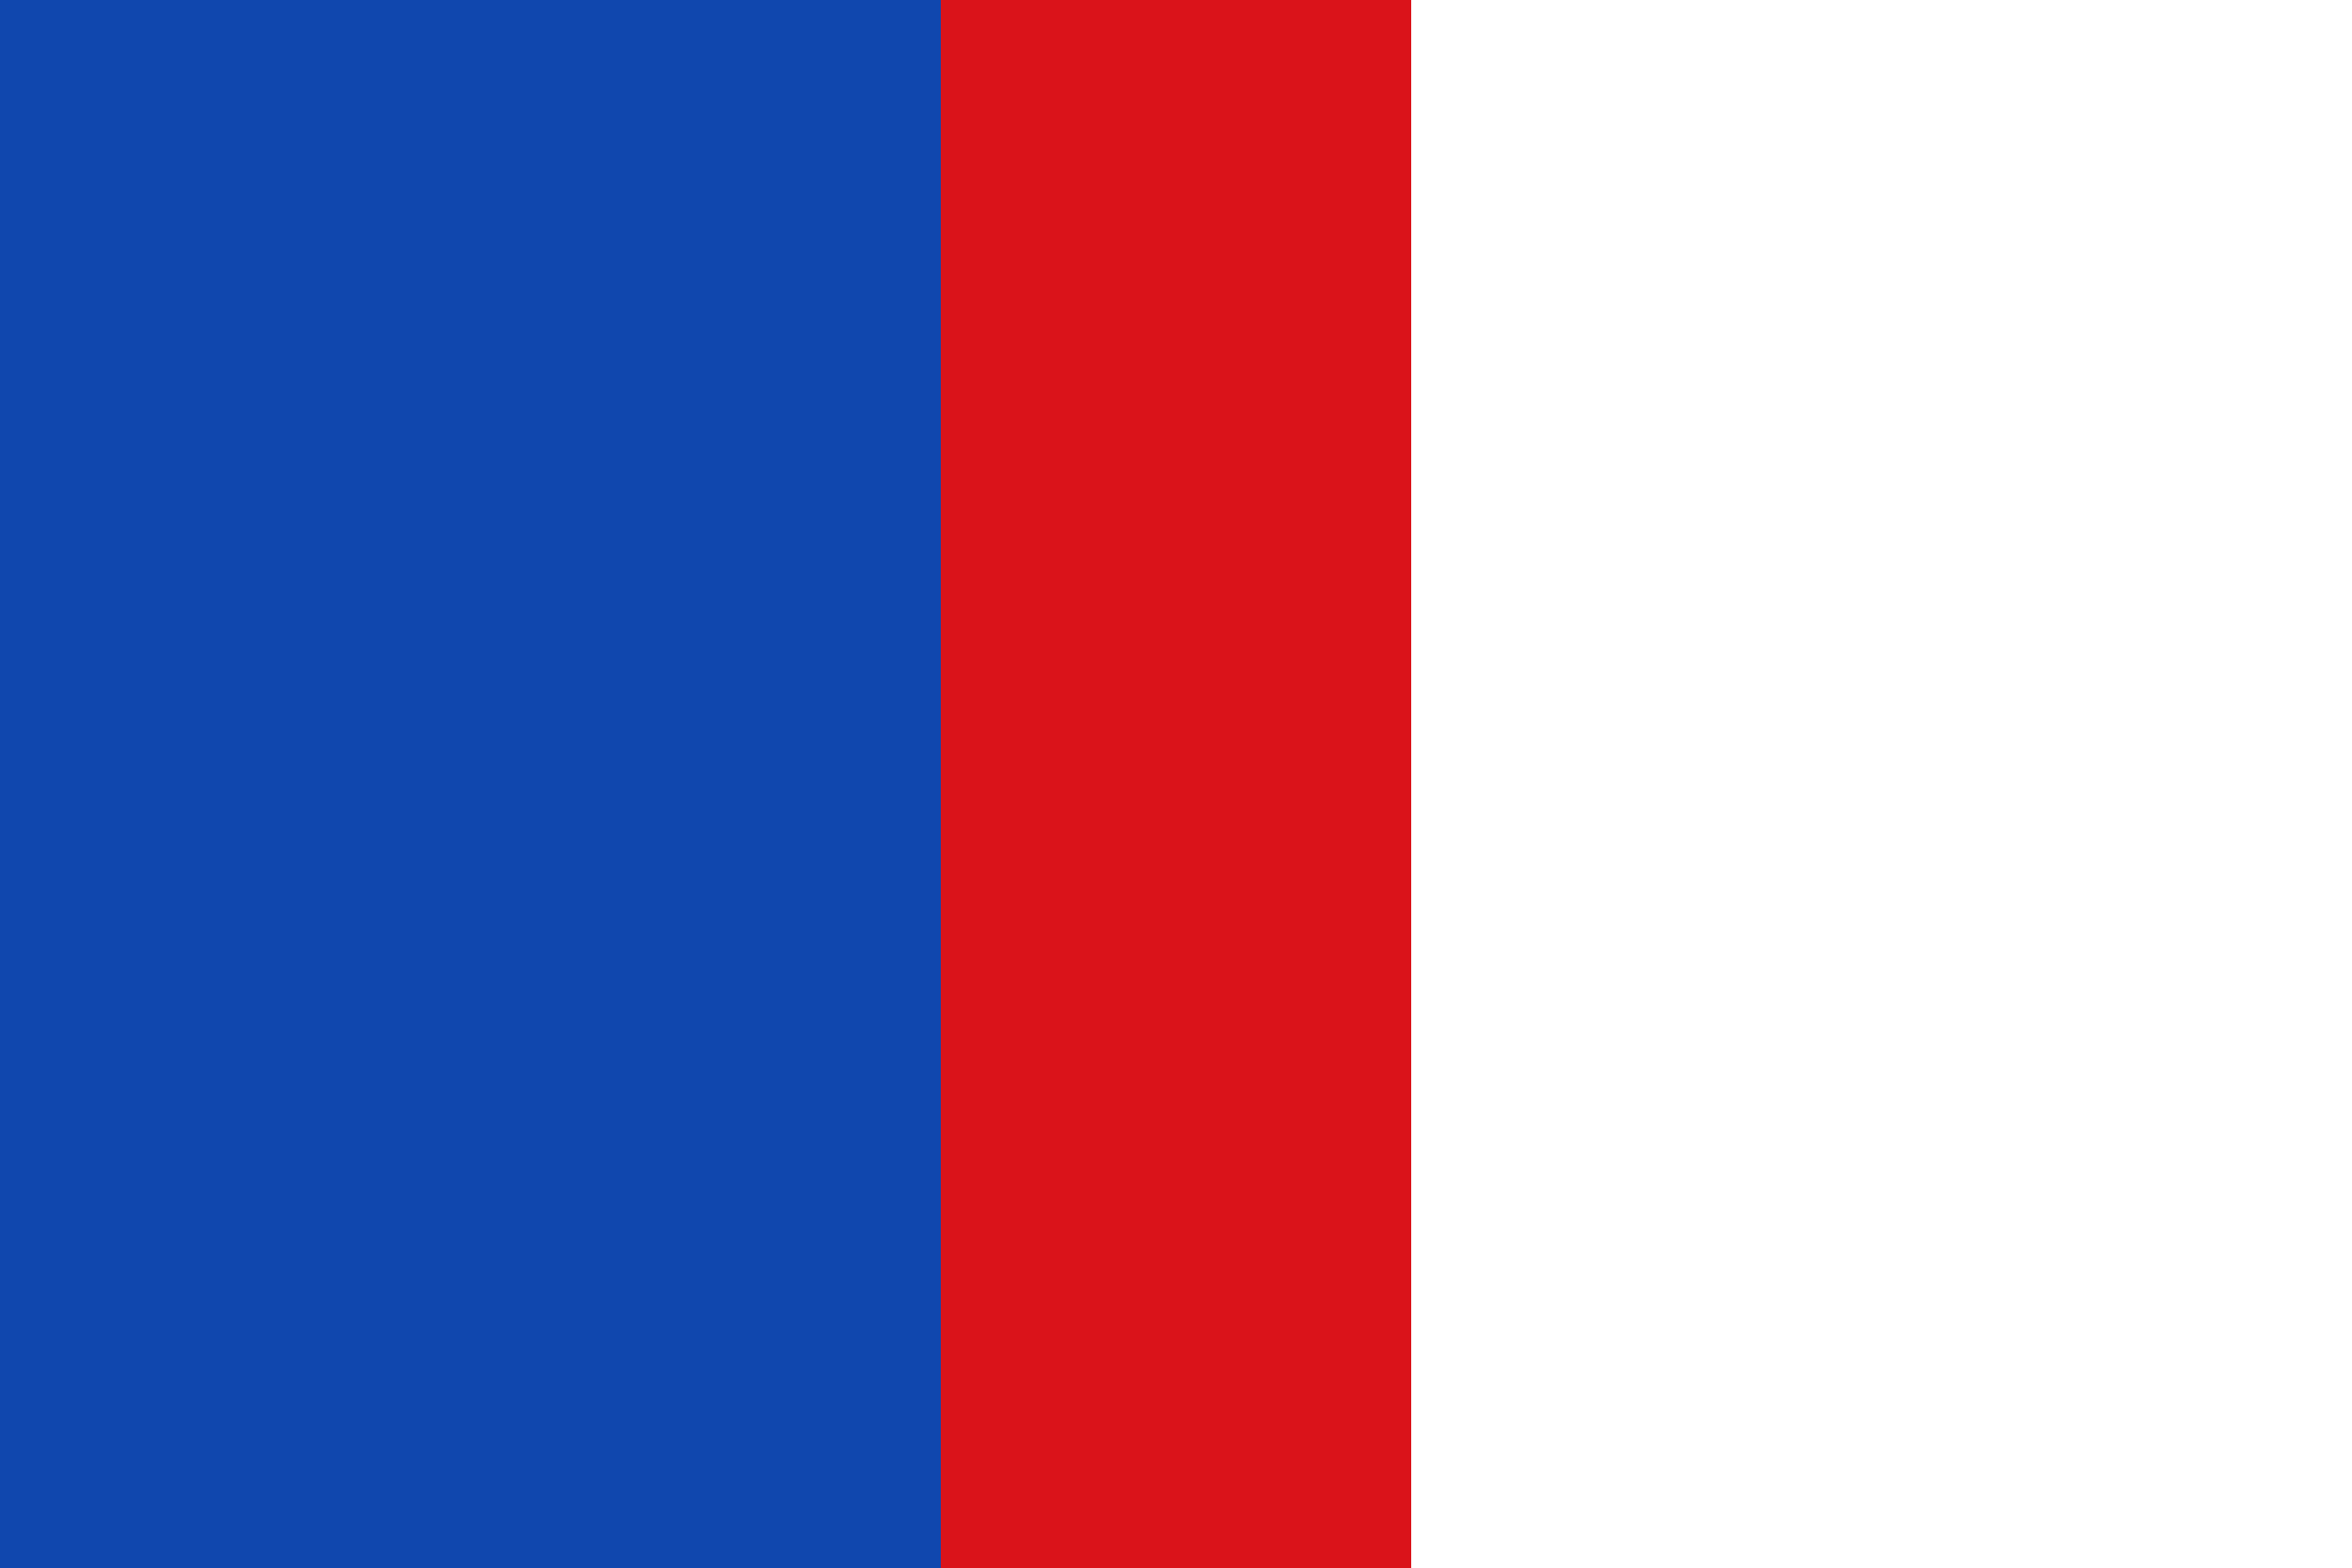 Glabbeek flag